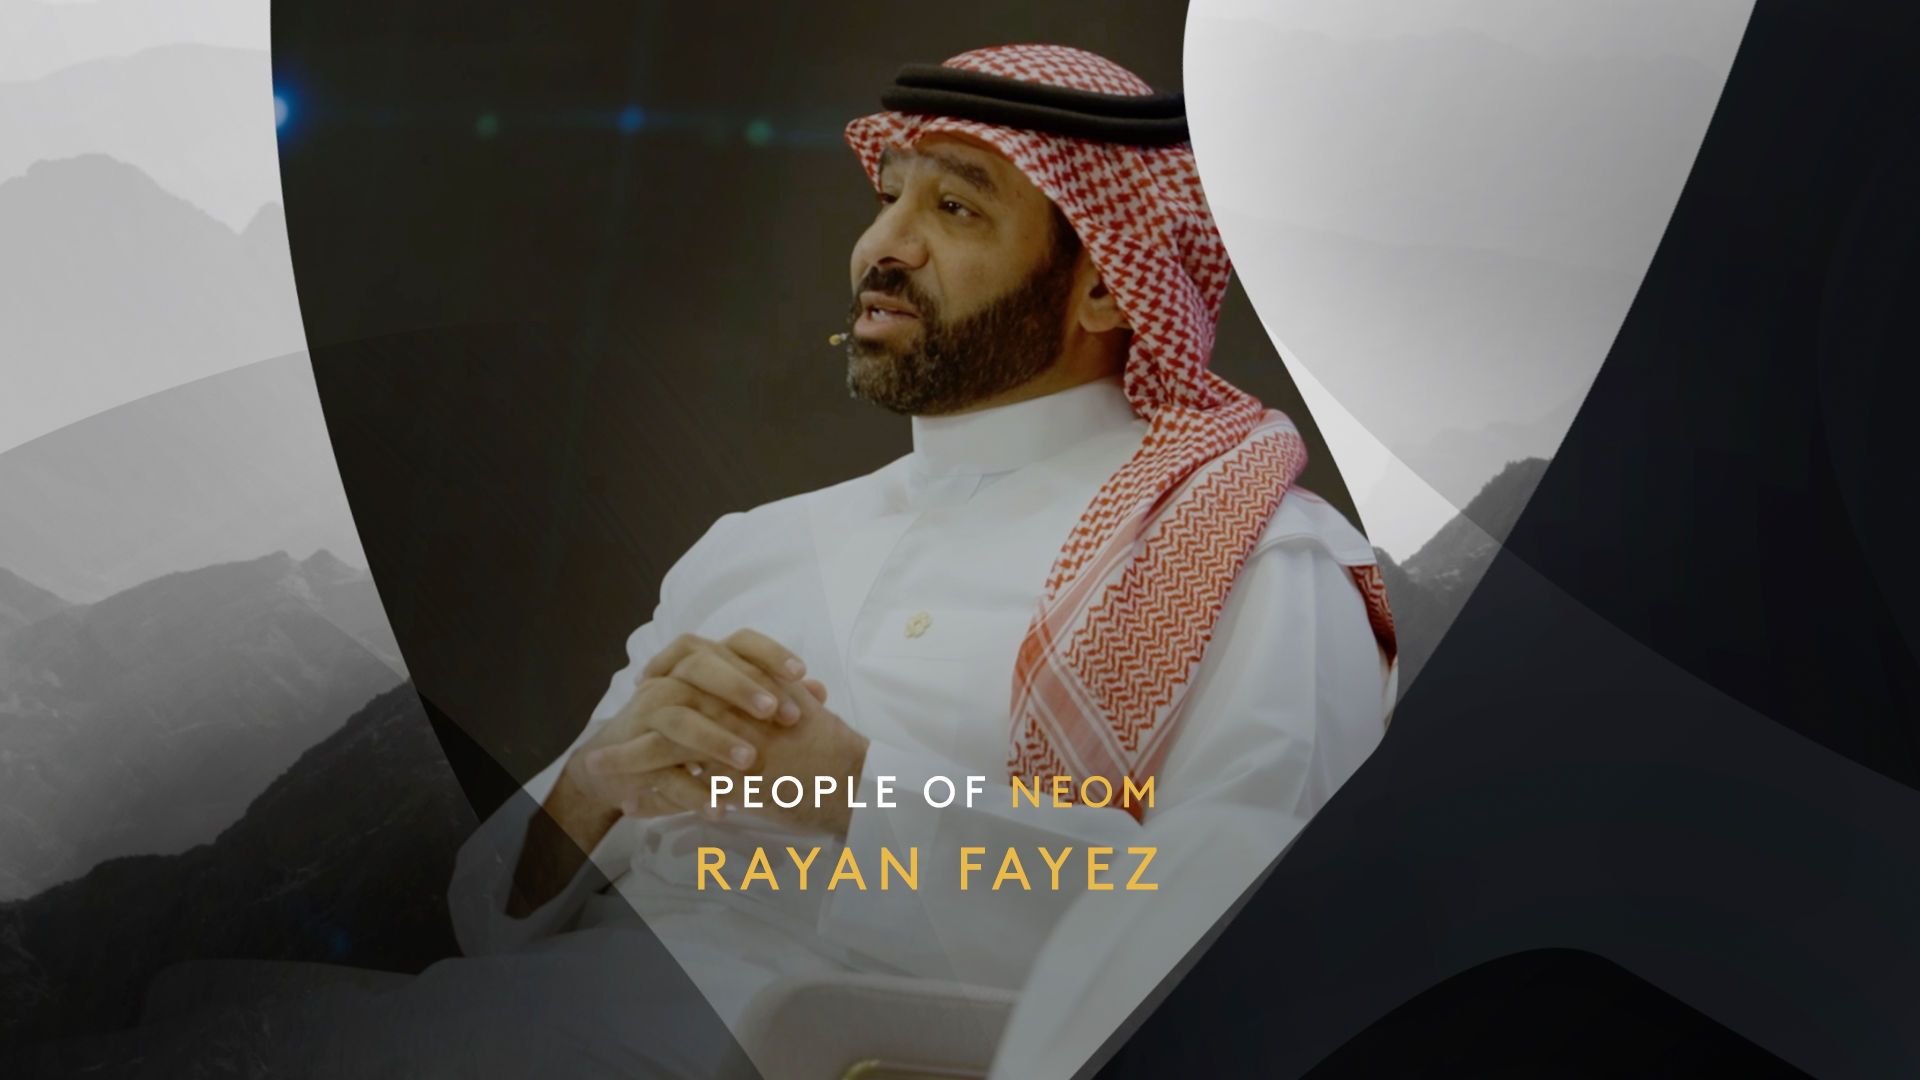 Rayan Fayez